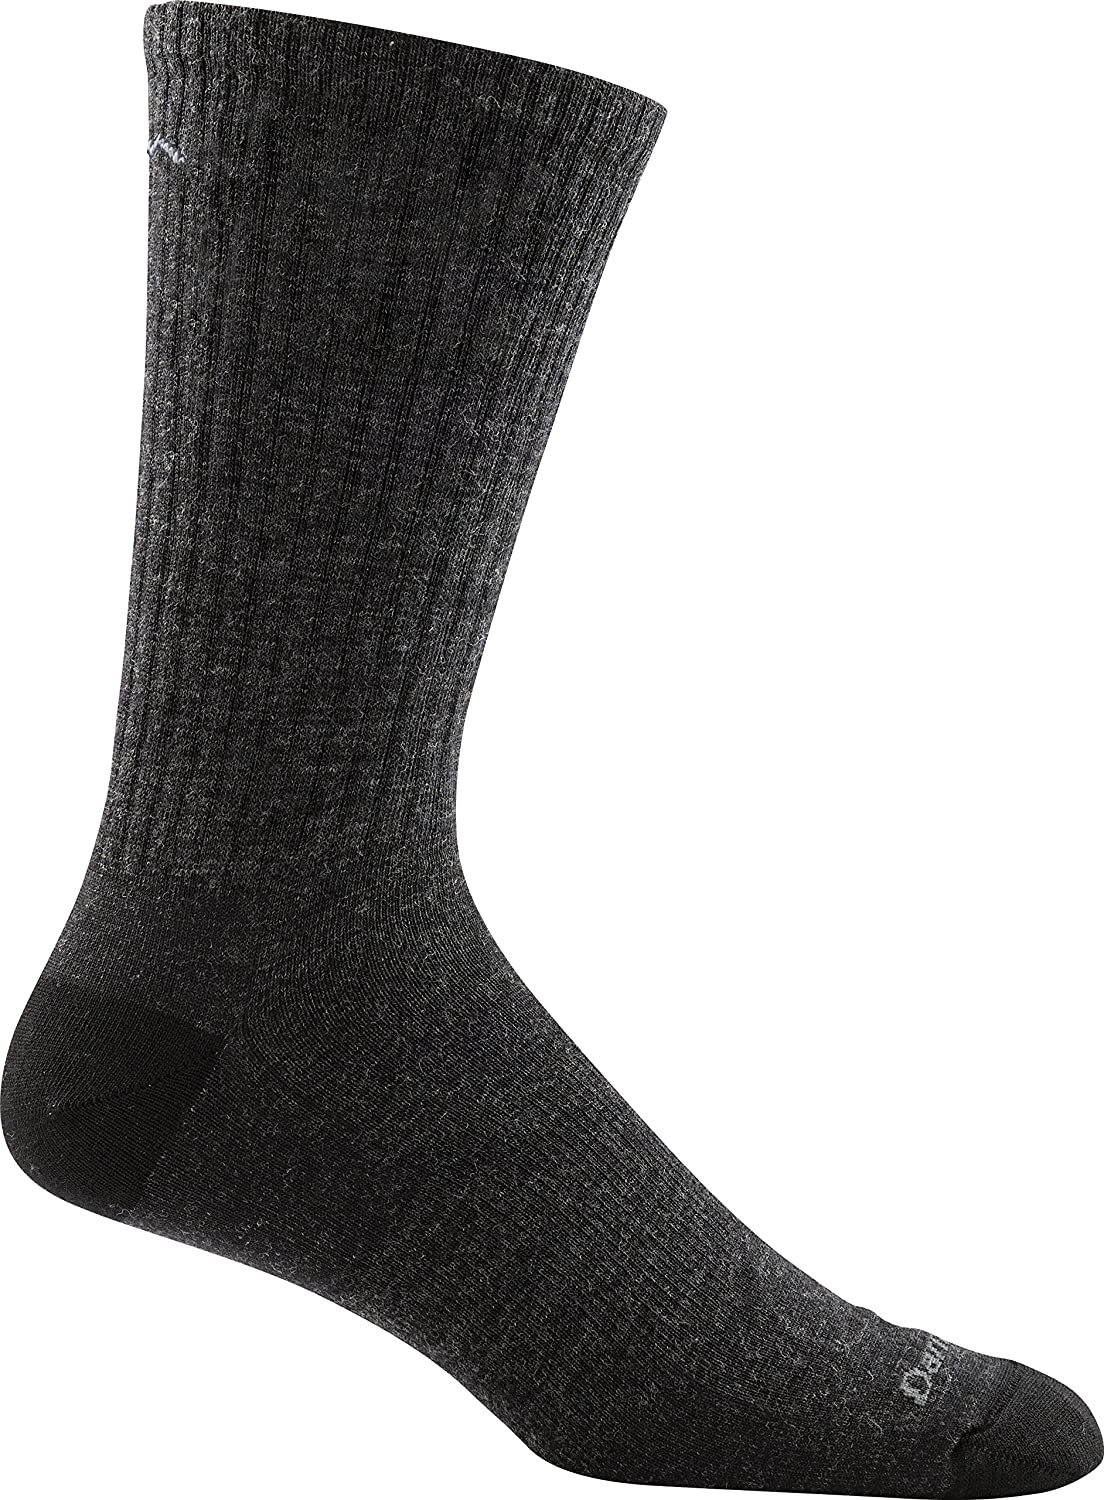 Men's Darn Tough Standard Mid-Calf Lightweight Sock in Charcoal